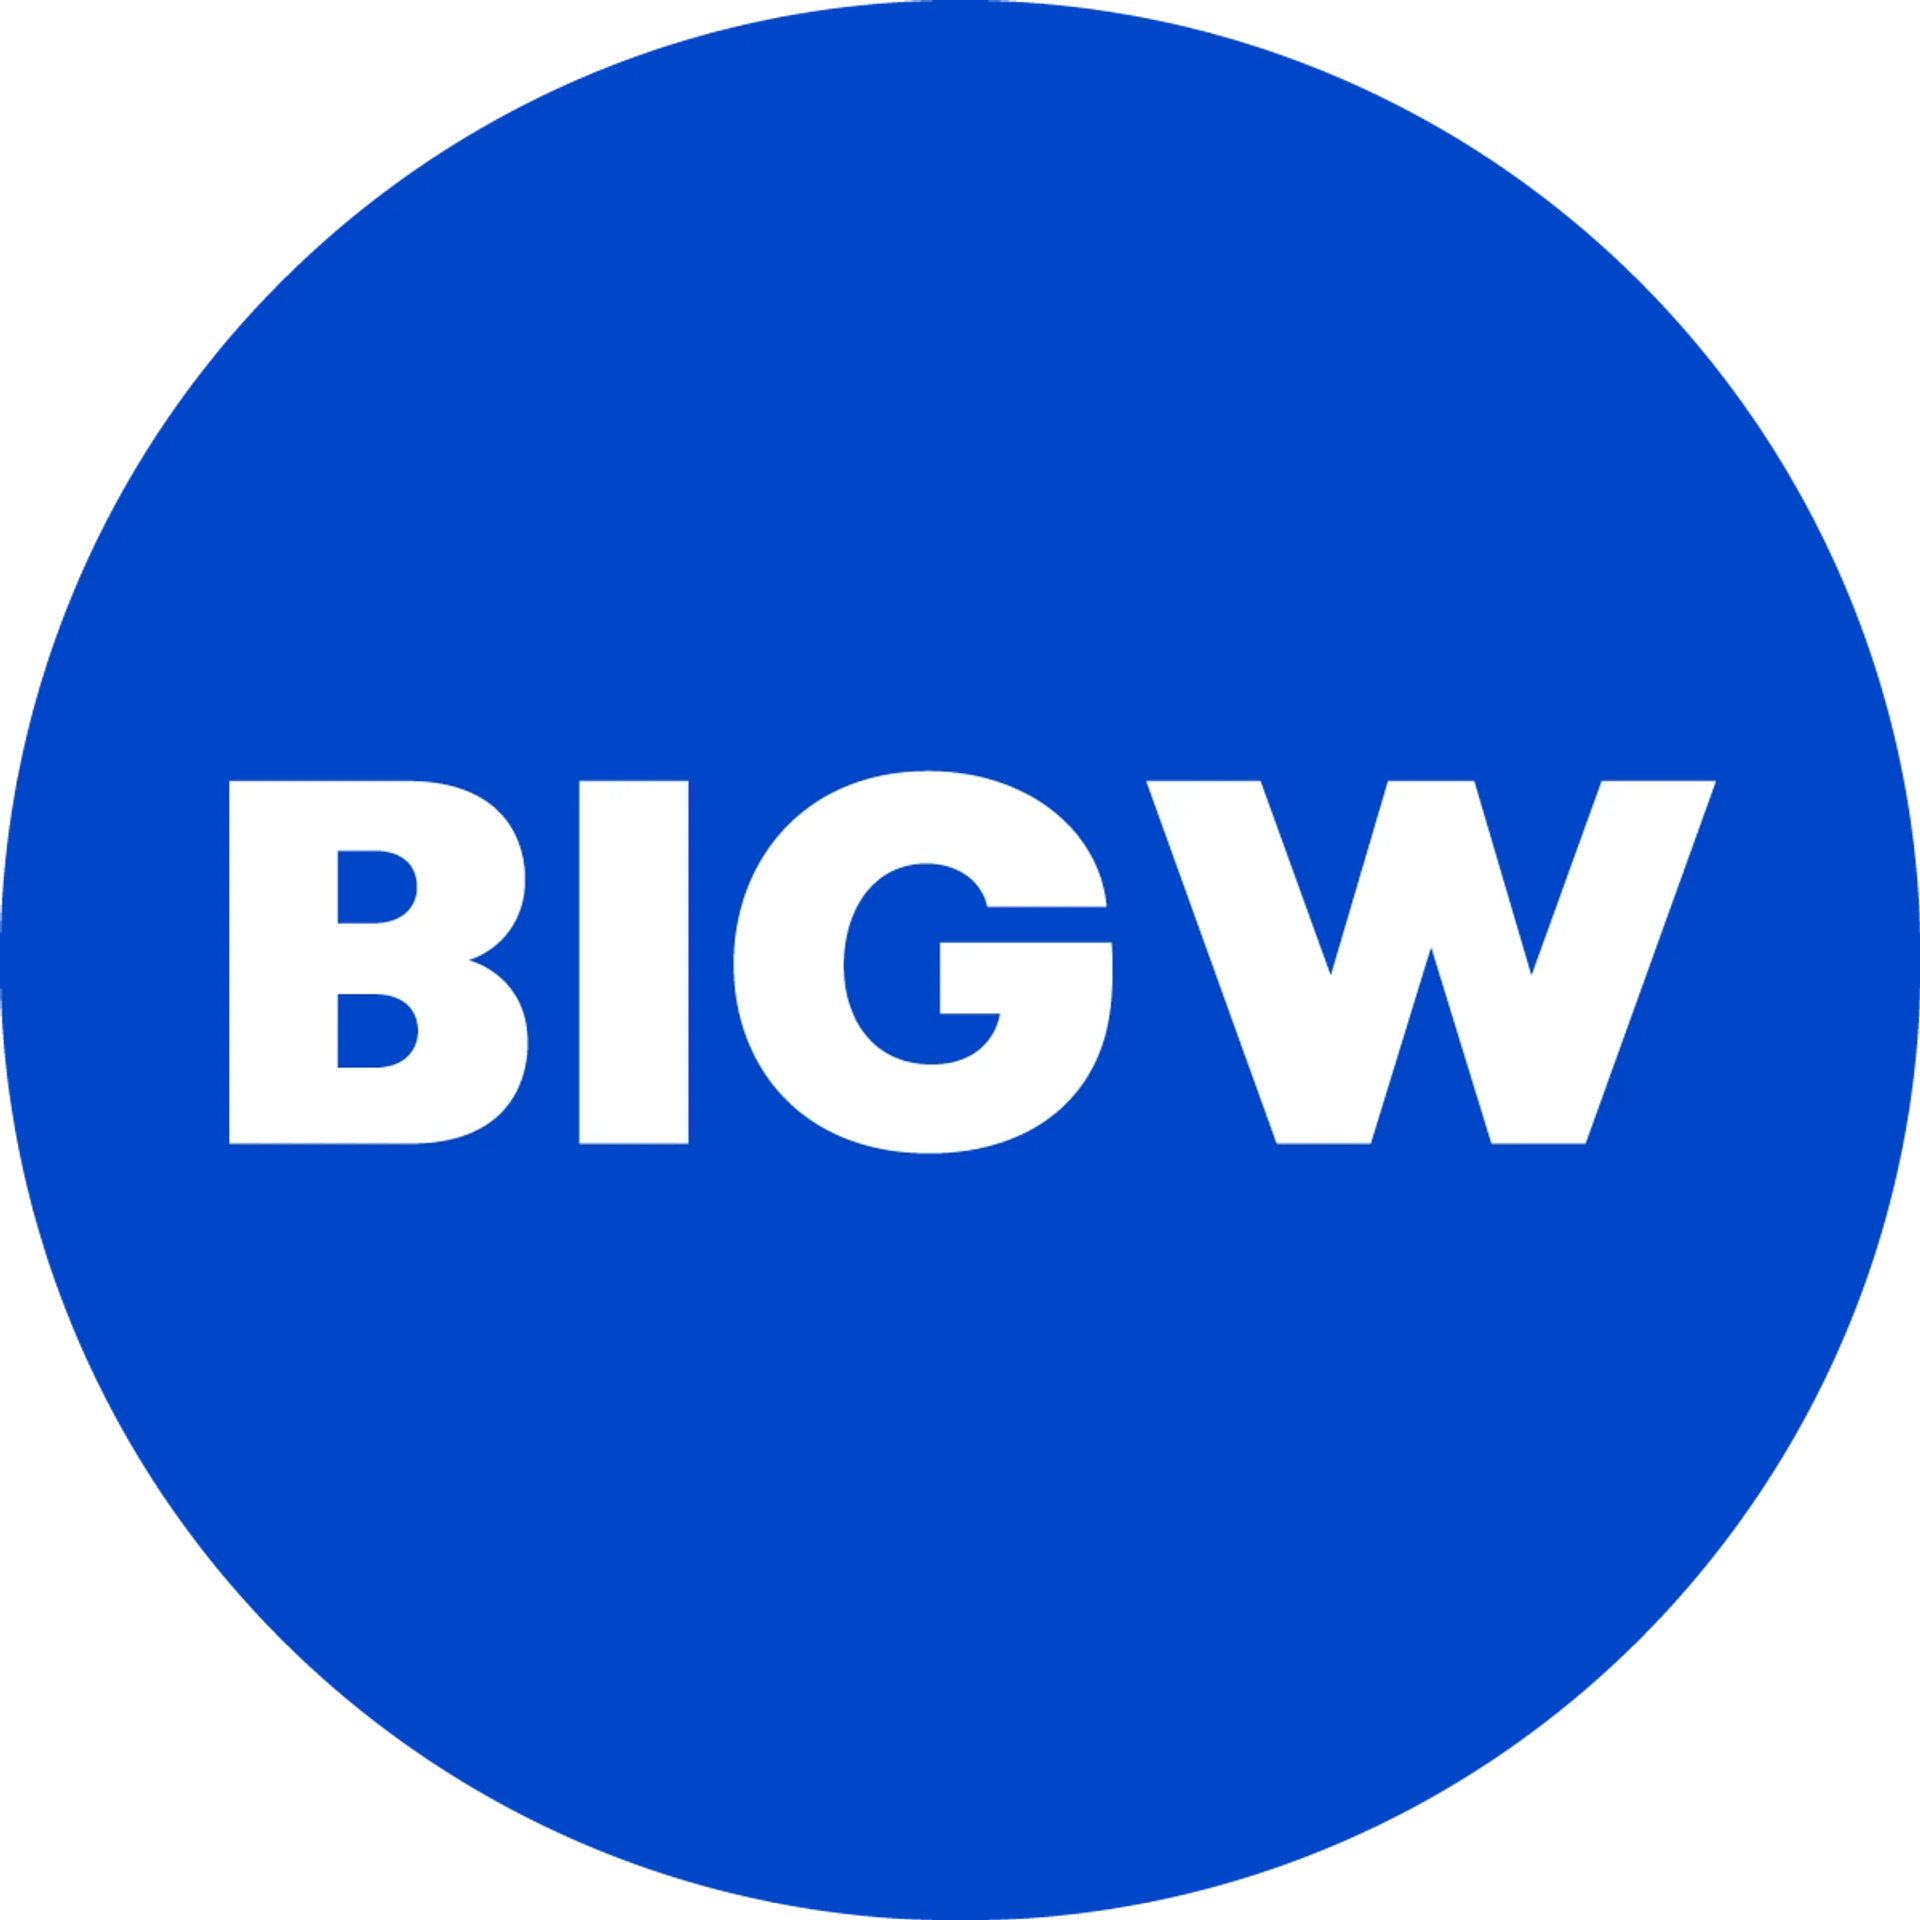 BIG W logo of current flyer